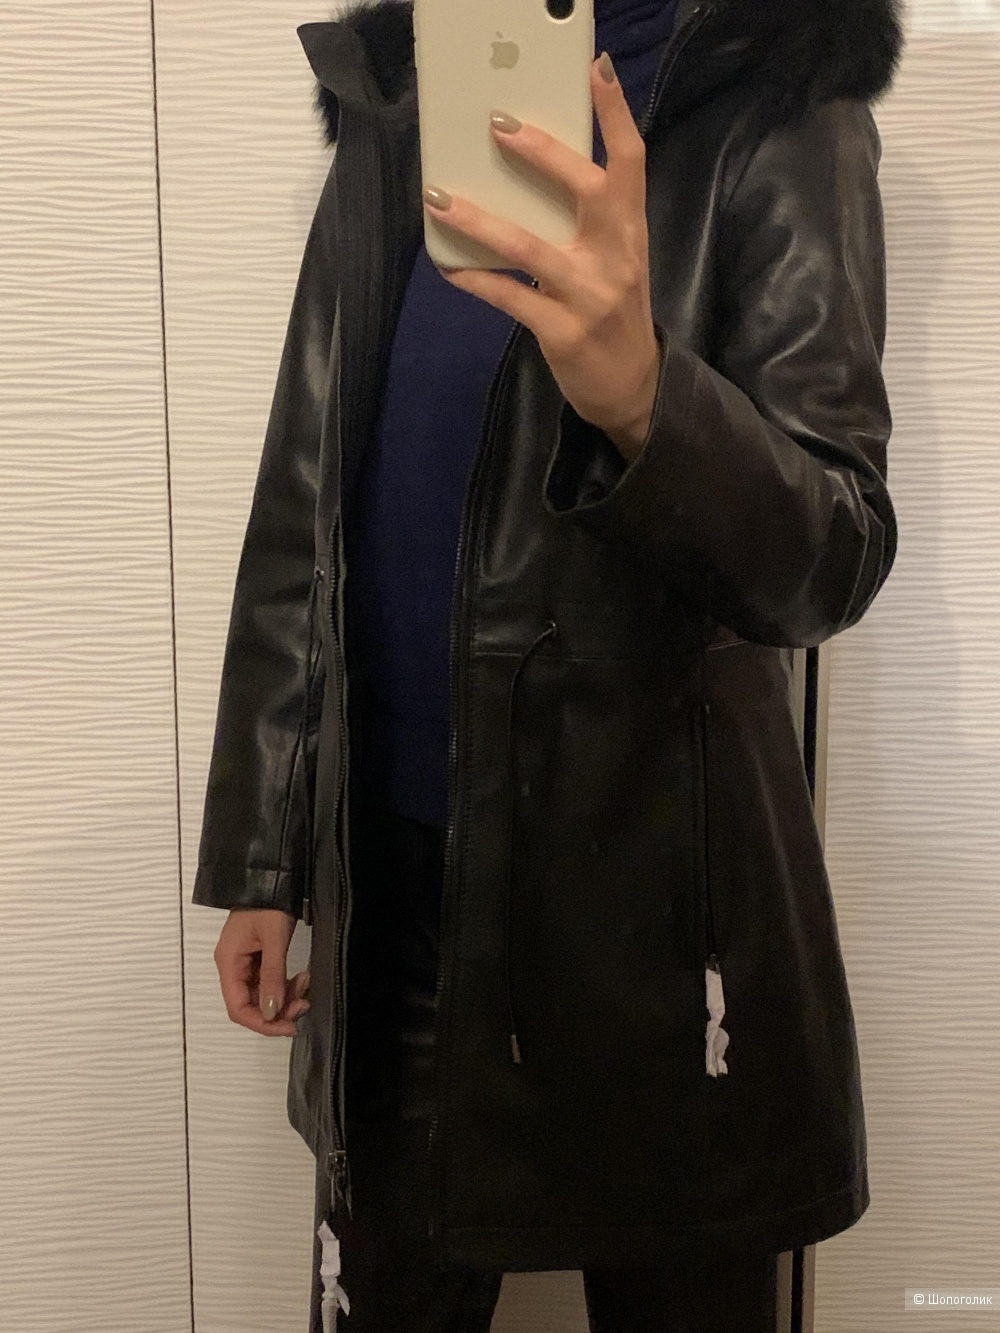 Кожаная куртка - пальто Massimo Dutti размер XS